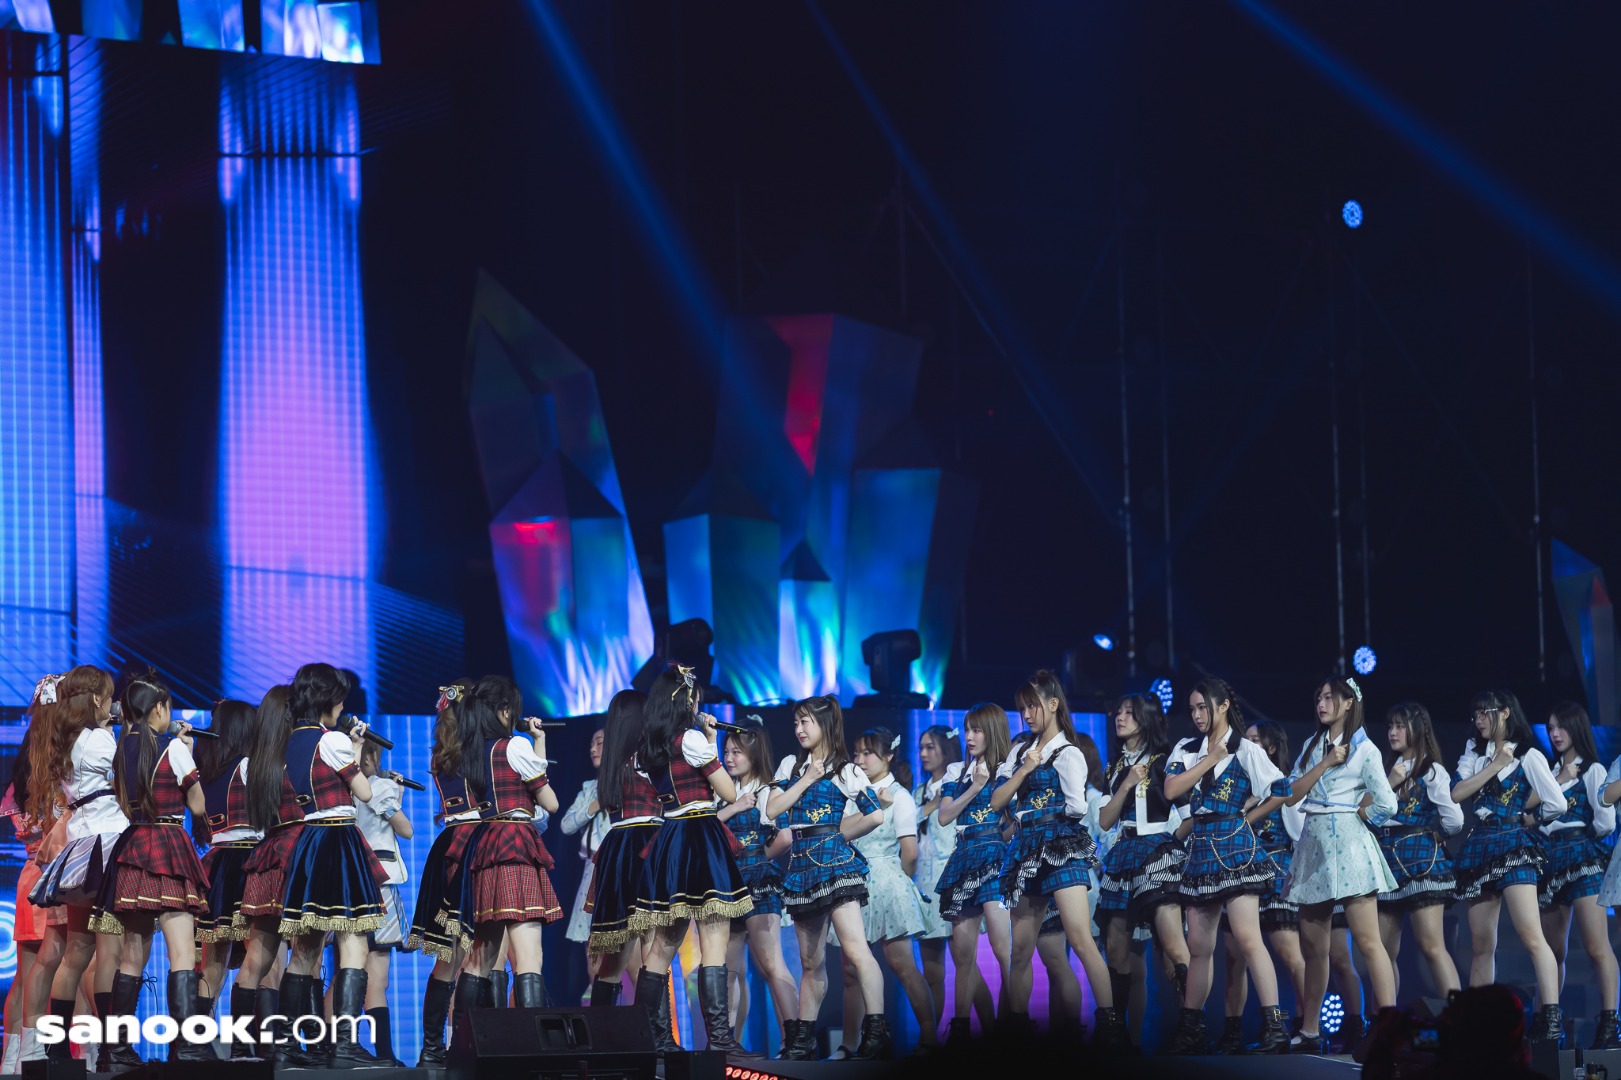  BNK48 vs CGM48 Concert “The Battle of Idols”